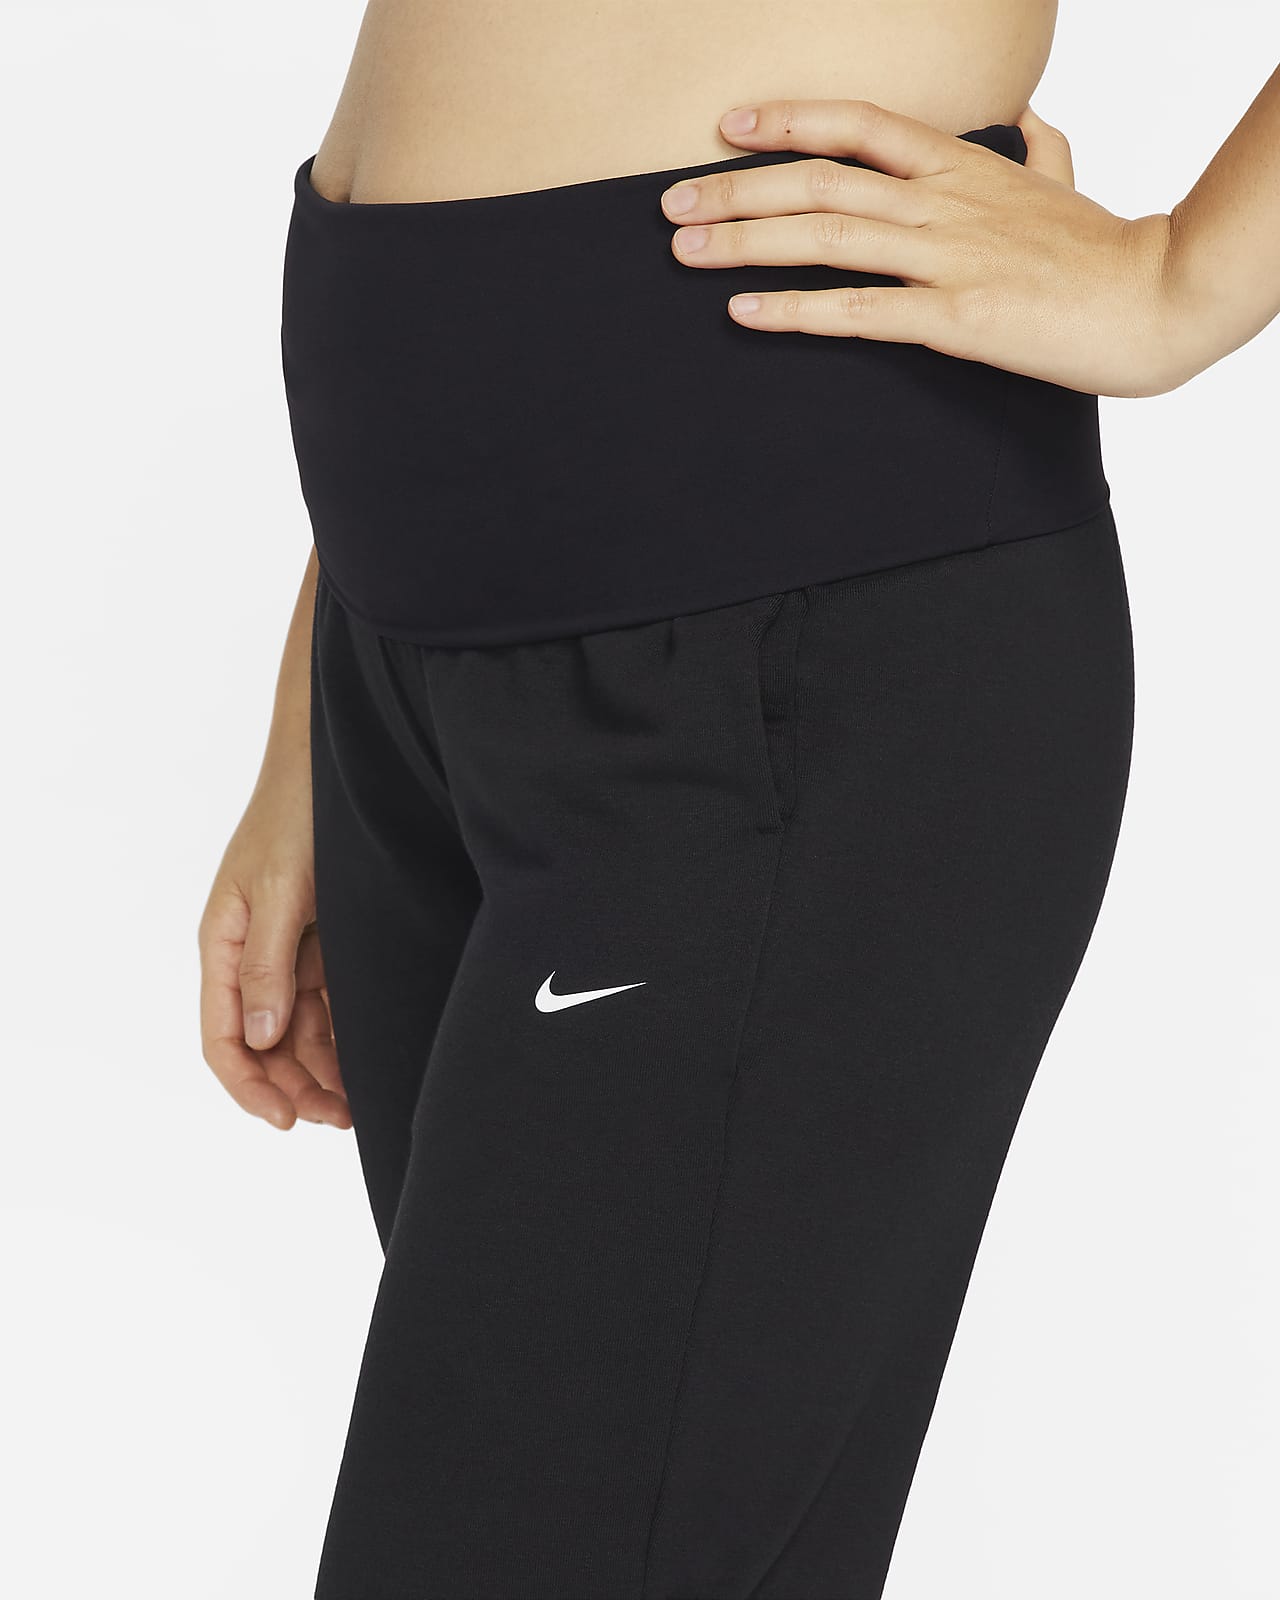 Black Nike One Maternity Leggings